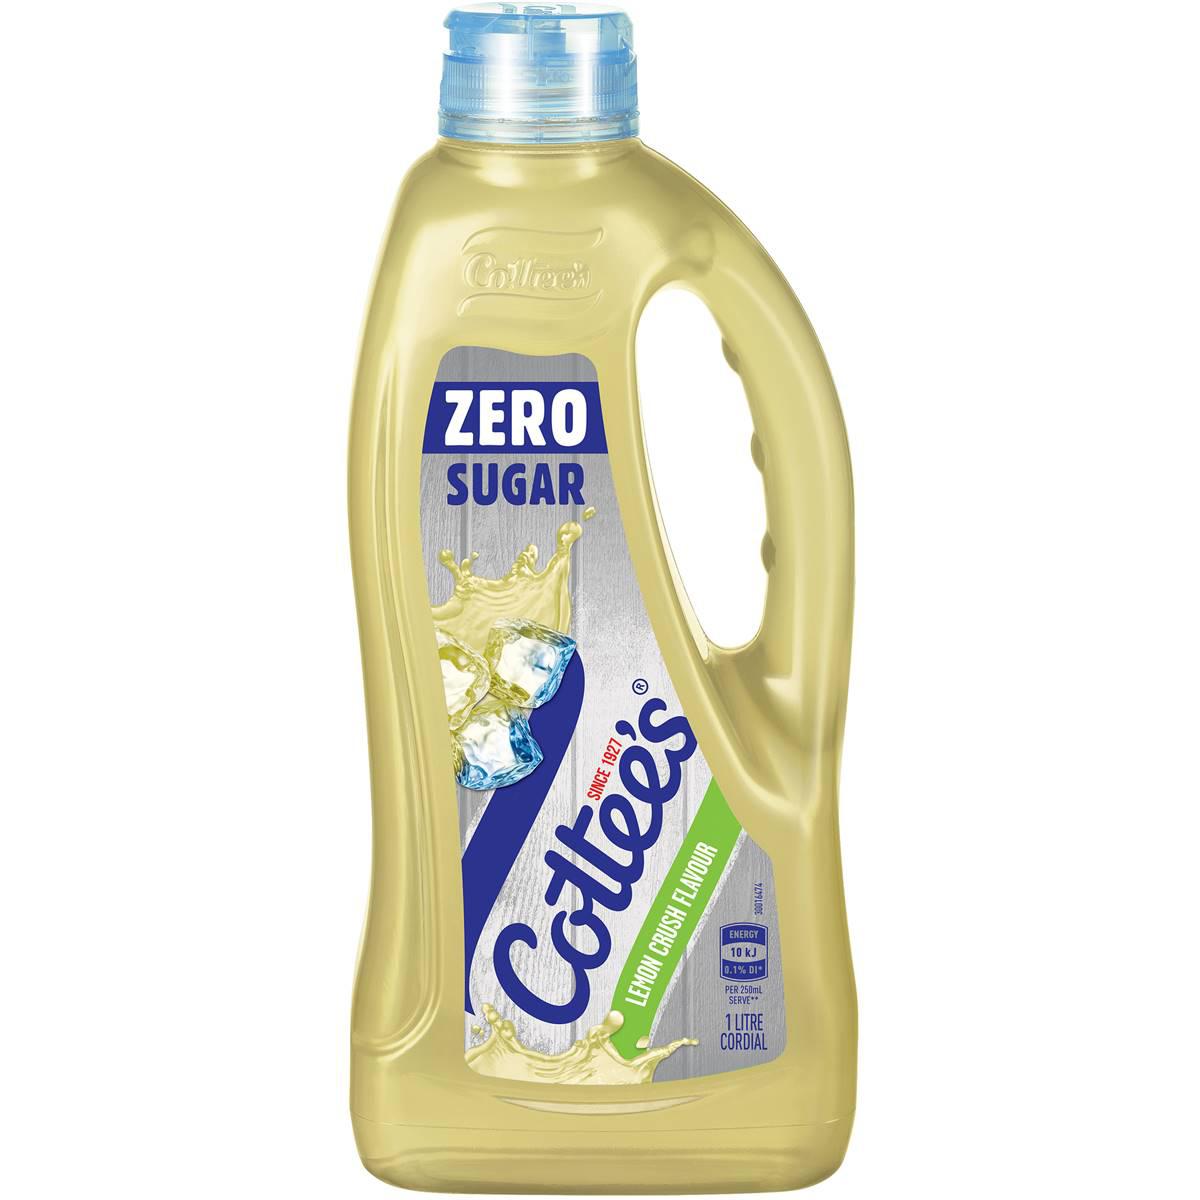 Cottee's Zero Sugar Cordial Lemon Cordial Lemon Crush Bottle 1l